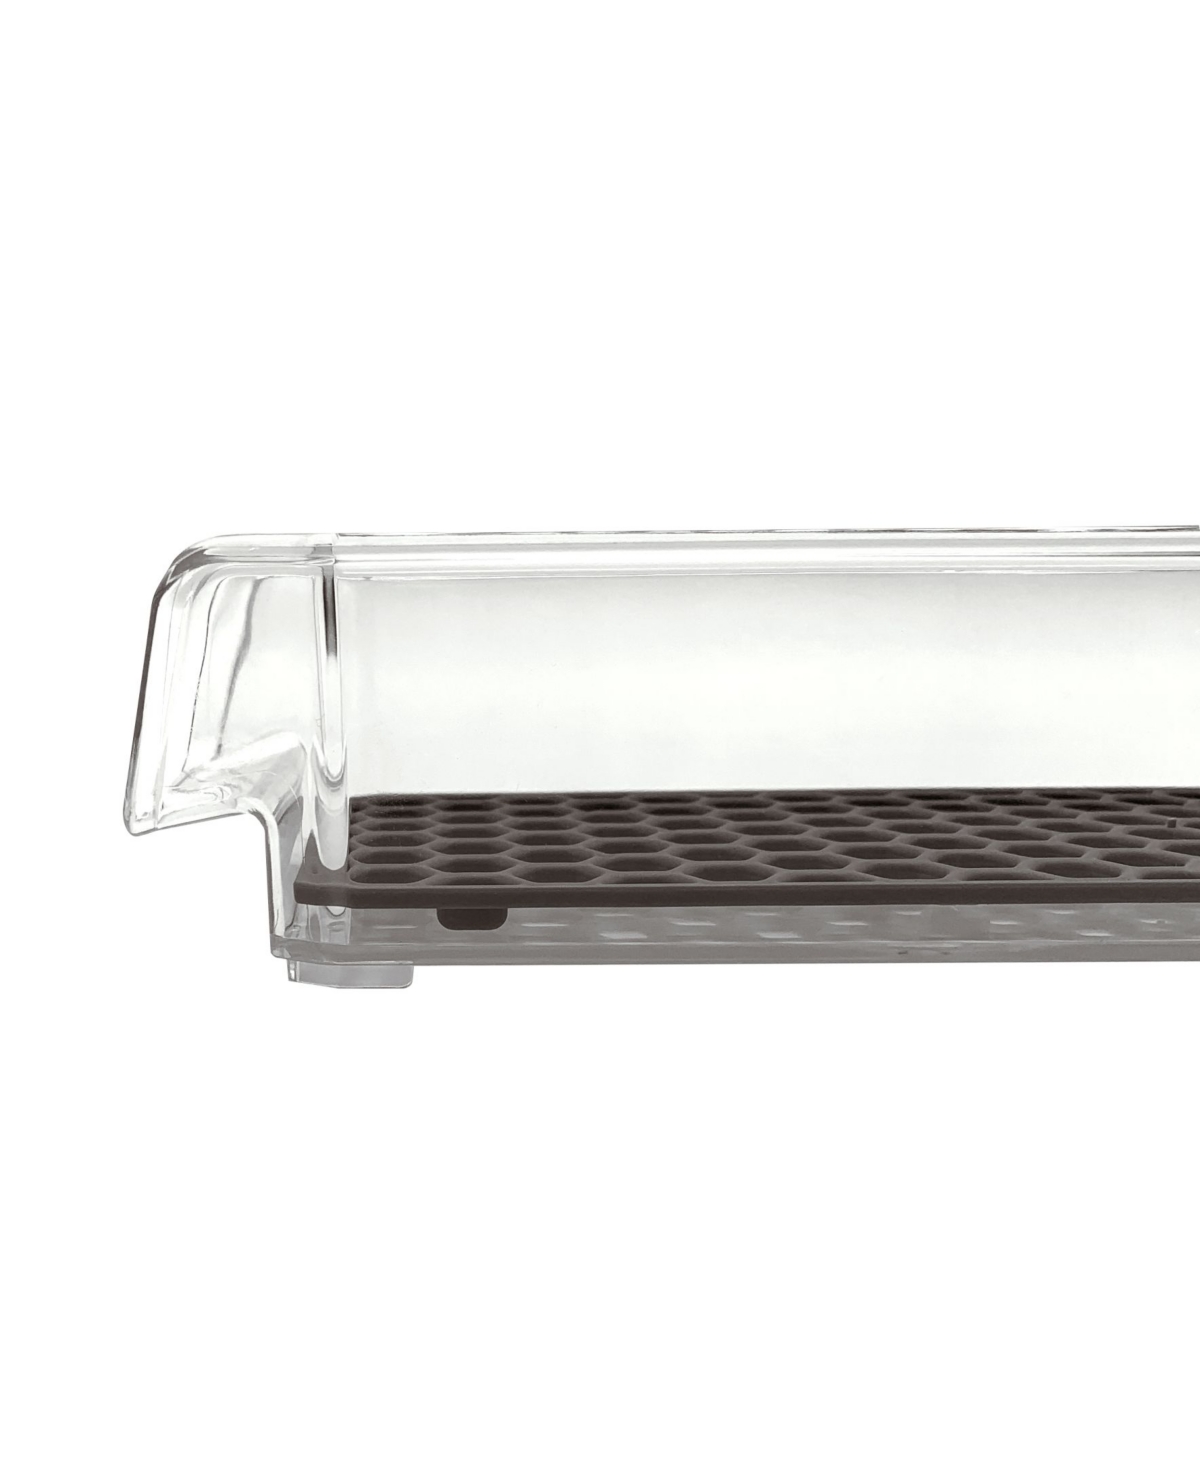 Shop Spectrum Diversified Hexa In-fridge Small Organizer Bin For Refrigerator Storage In Clear And Dark Gray